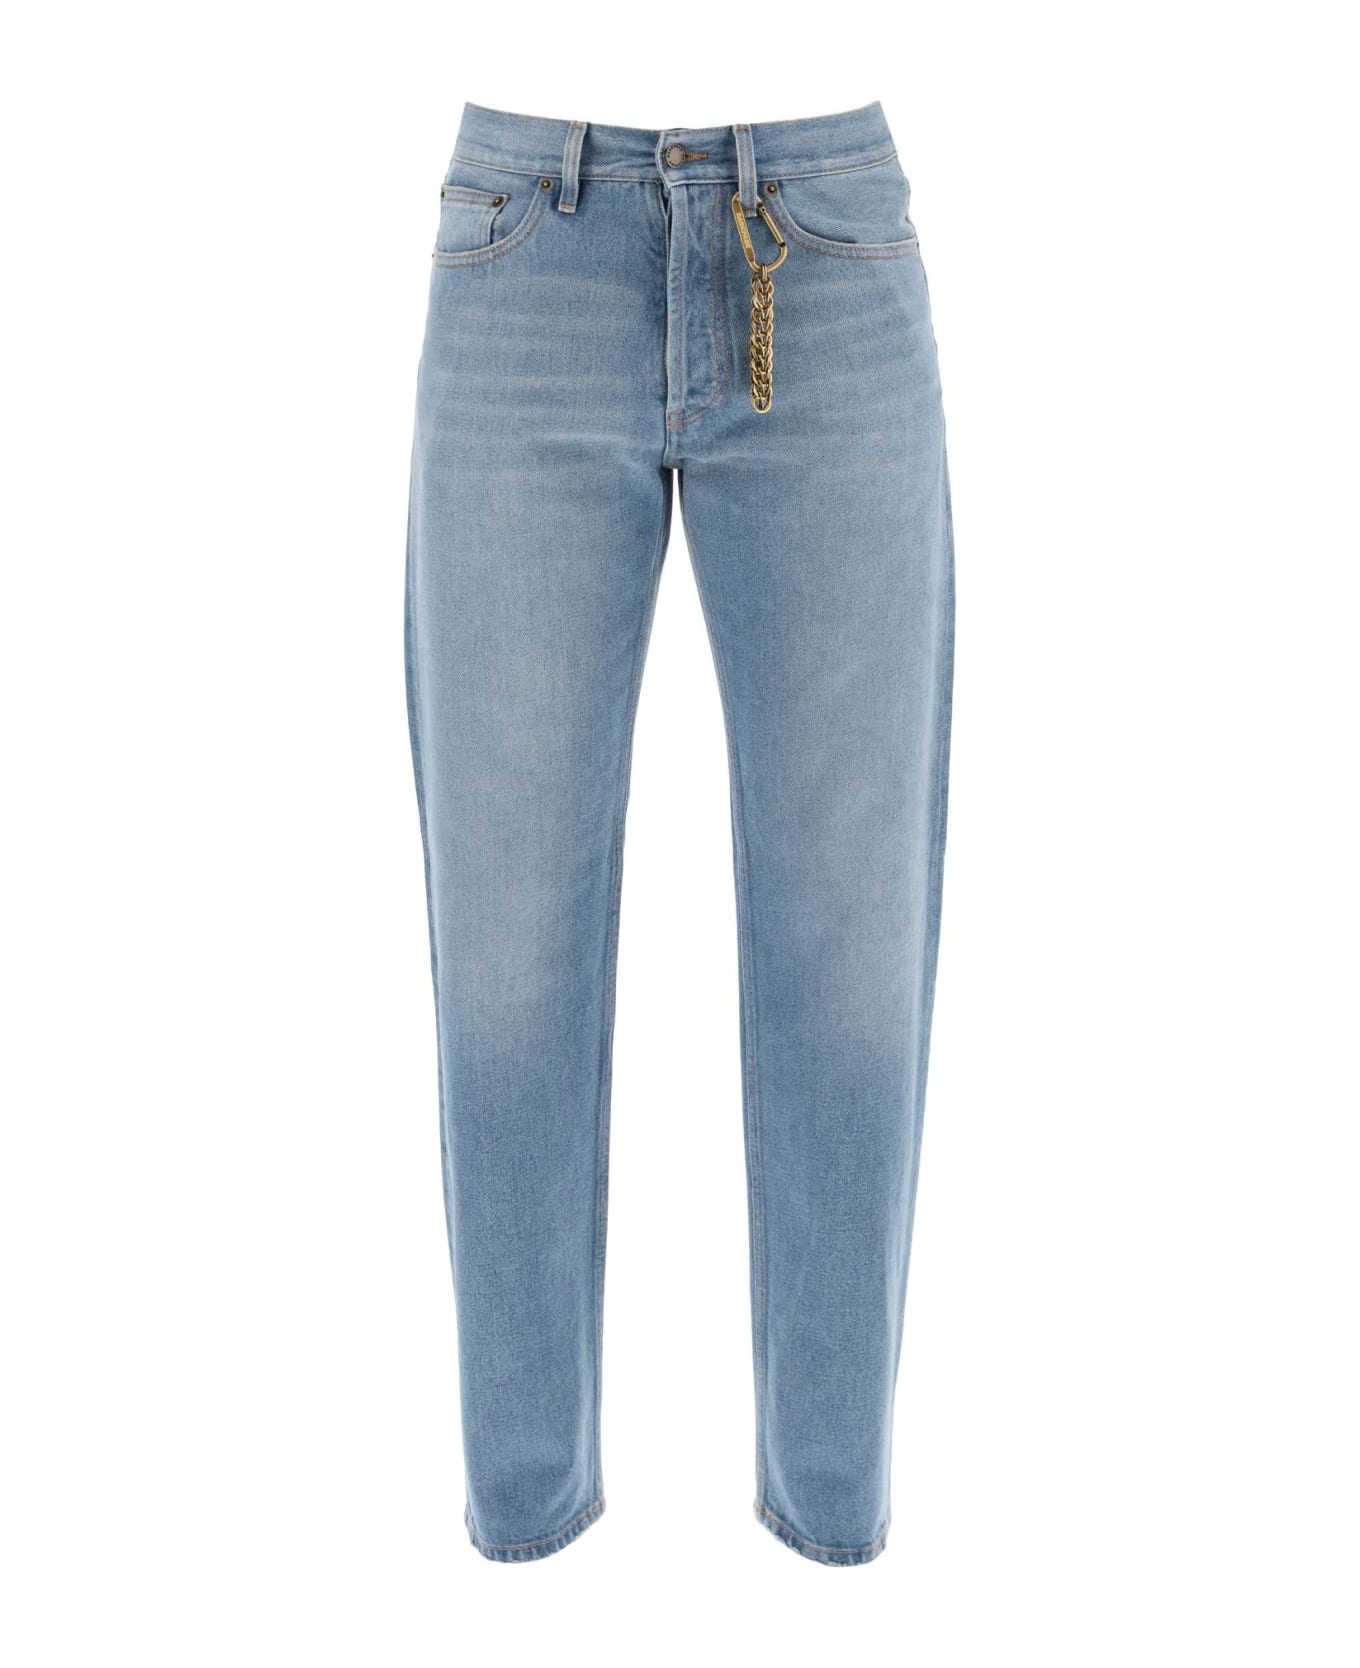 DARKPARK Larry Straight Cut Jeans - FULL BLUE (Light blue)